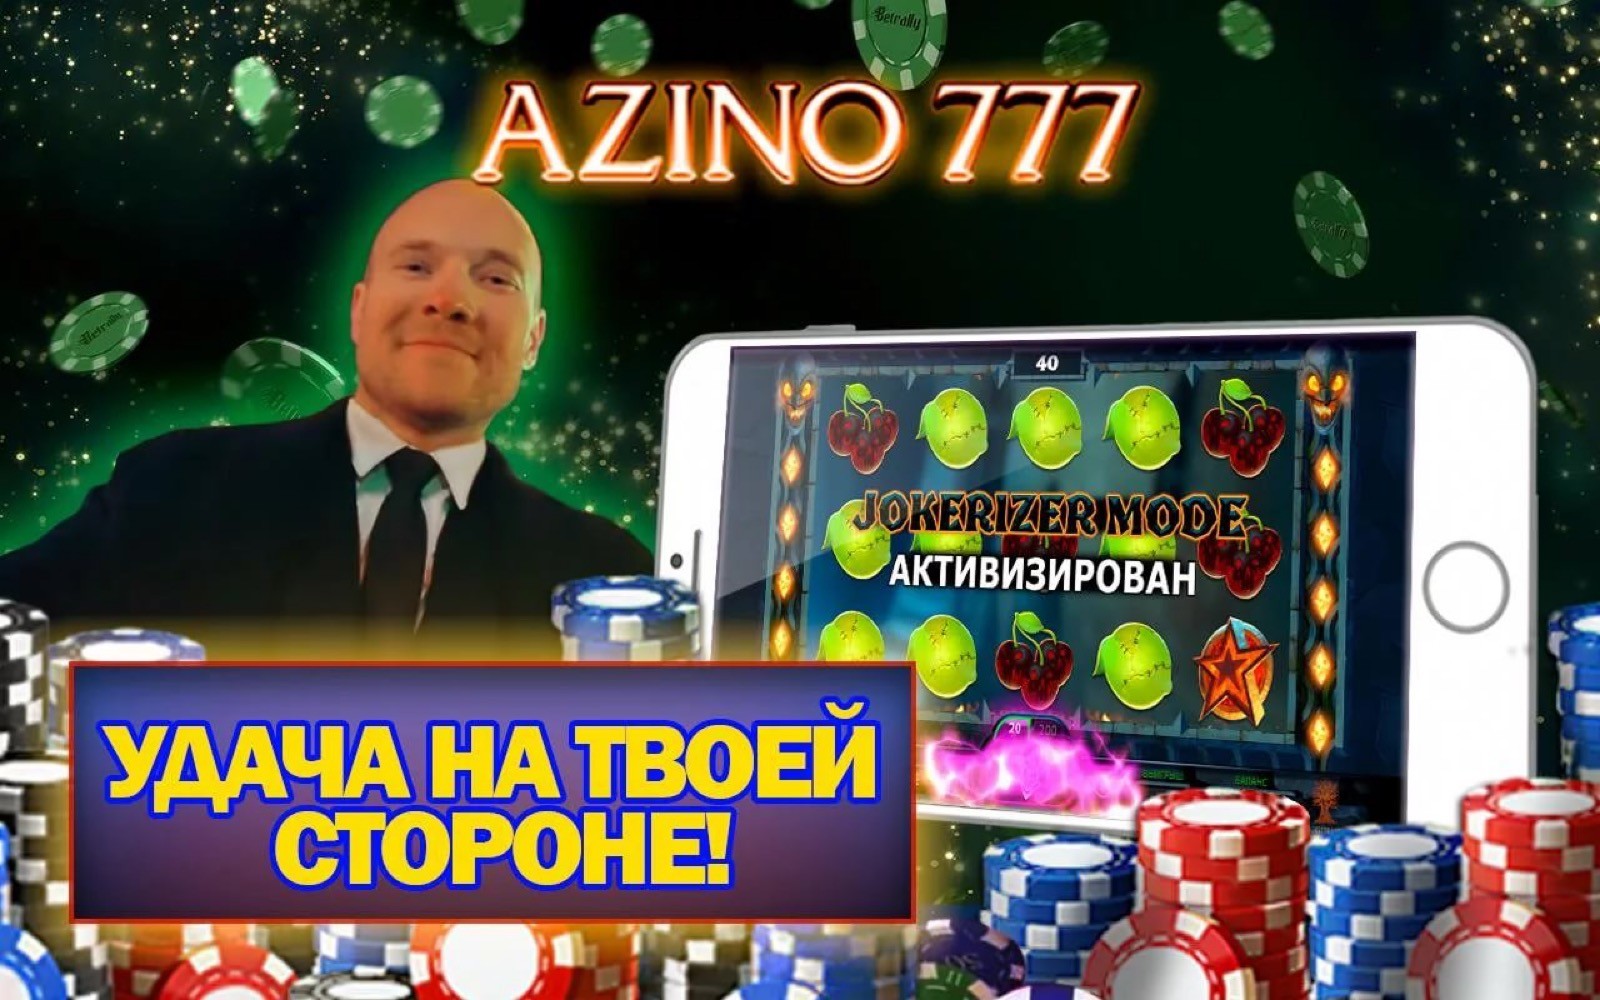 Azino777 ru site. Азино777. Казино 777. Азино777 777. Казино azino777.